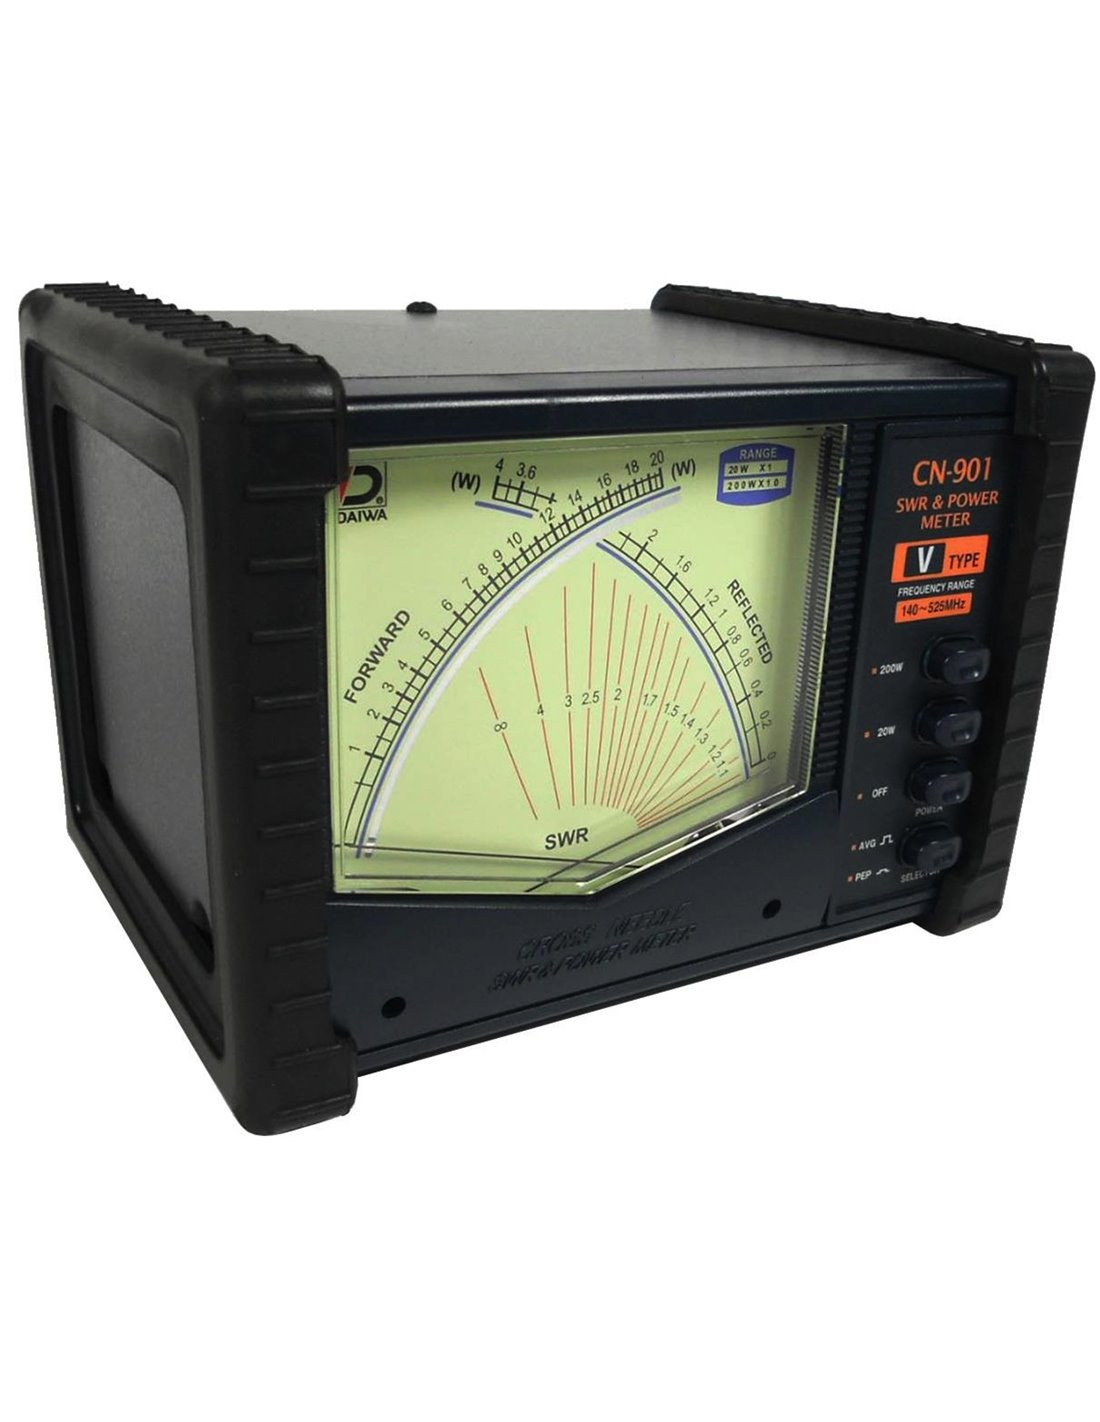 Измеритель мощности и КСВ Daiwa CN-901VN - VHF/UHF 140/525 МГц, 200 Вт